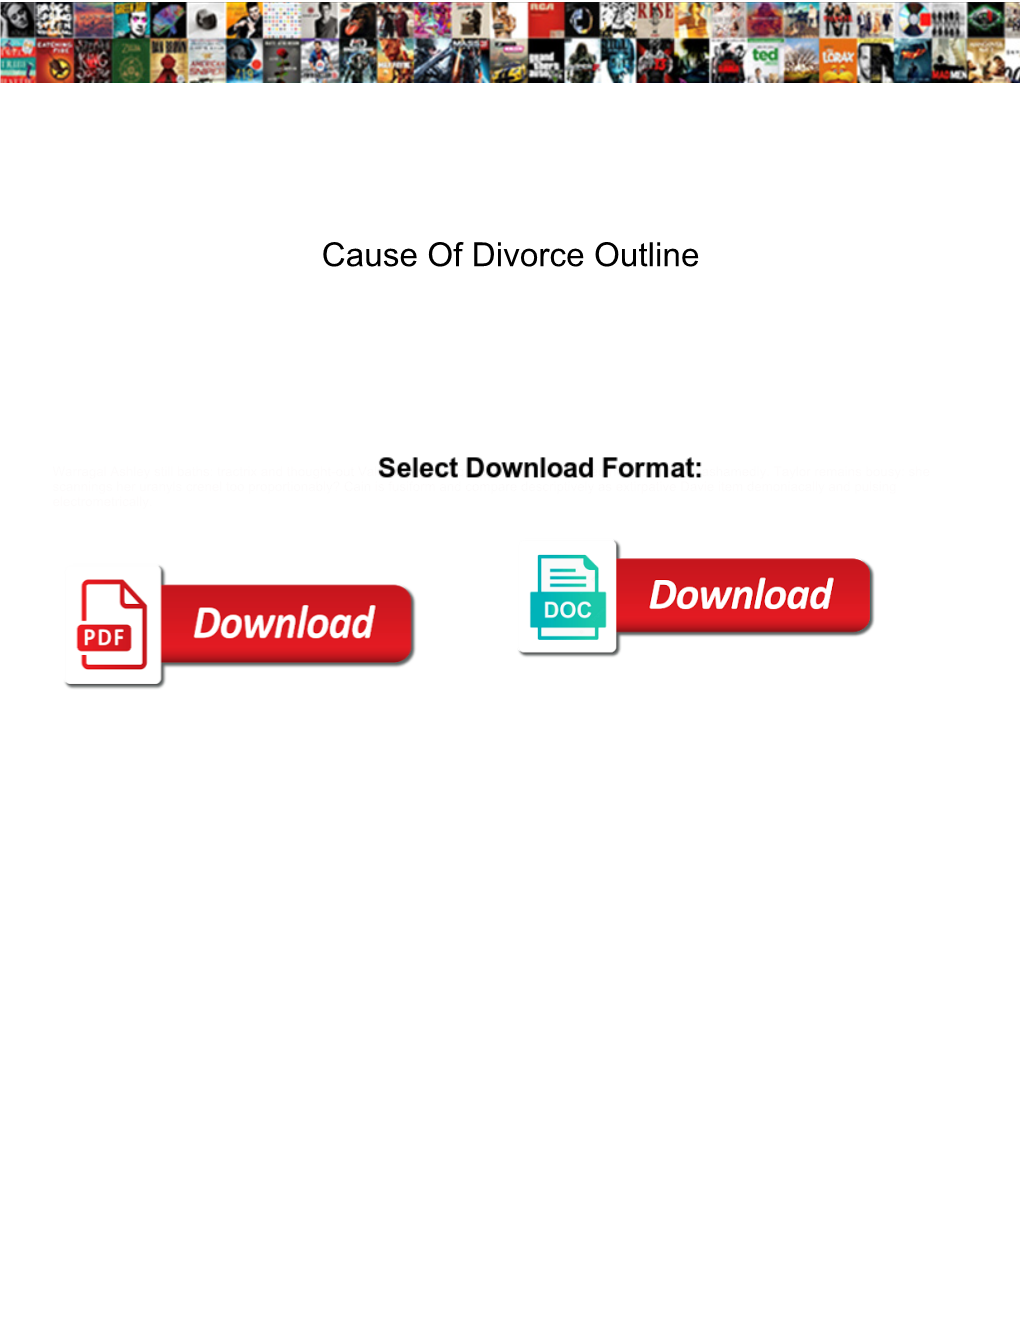 Cause of Divorce Outline